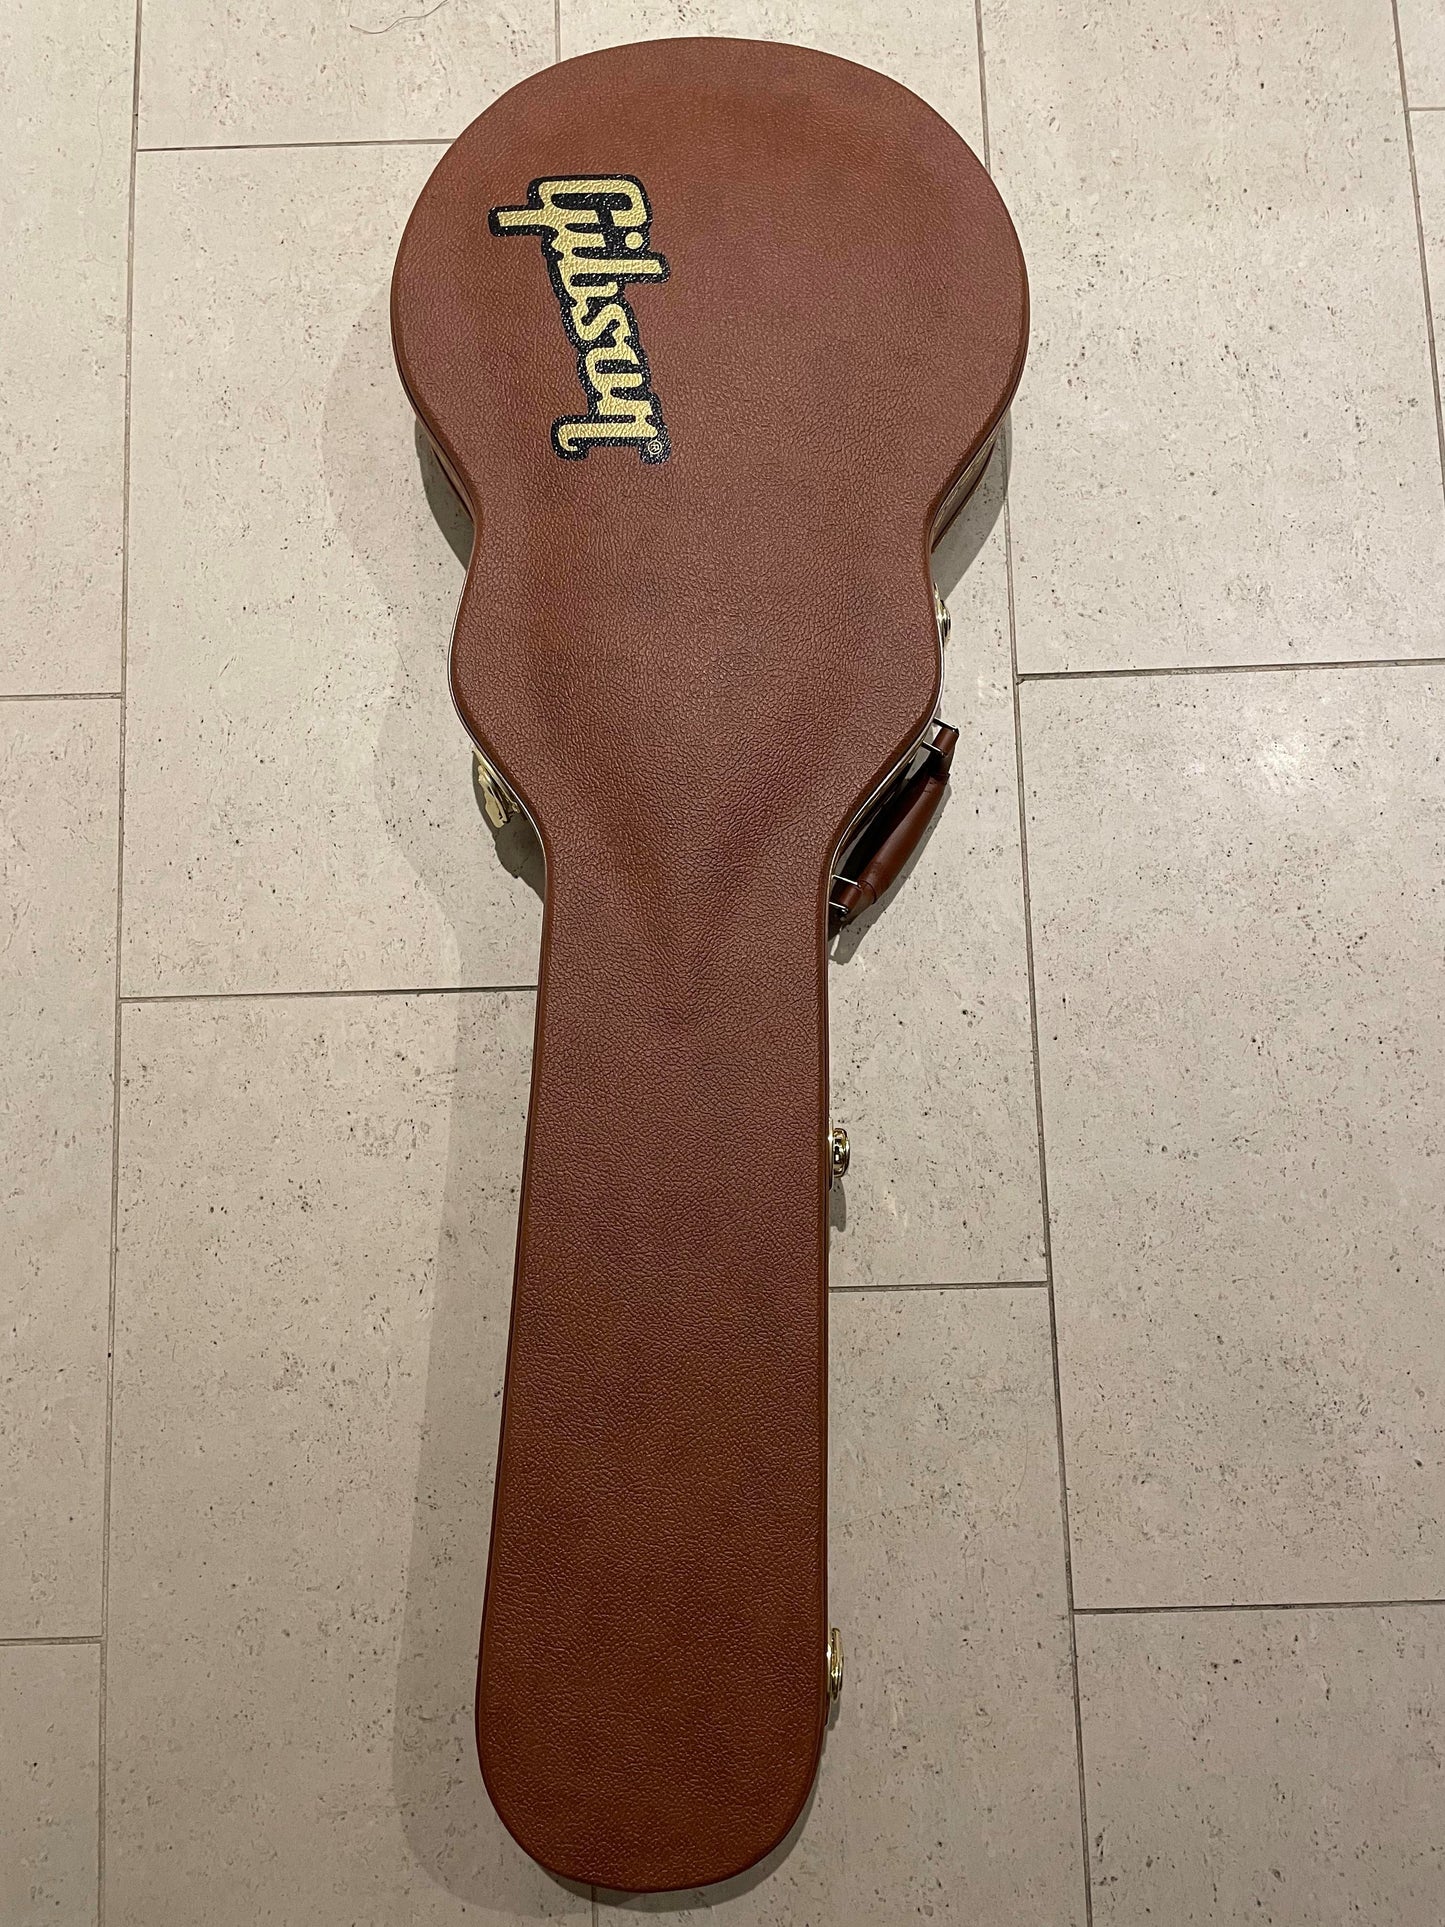 Gibson Les Paul Classic Honeyburst 2019 Electric Guitar